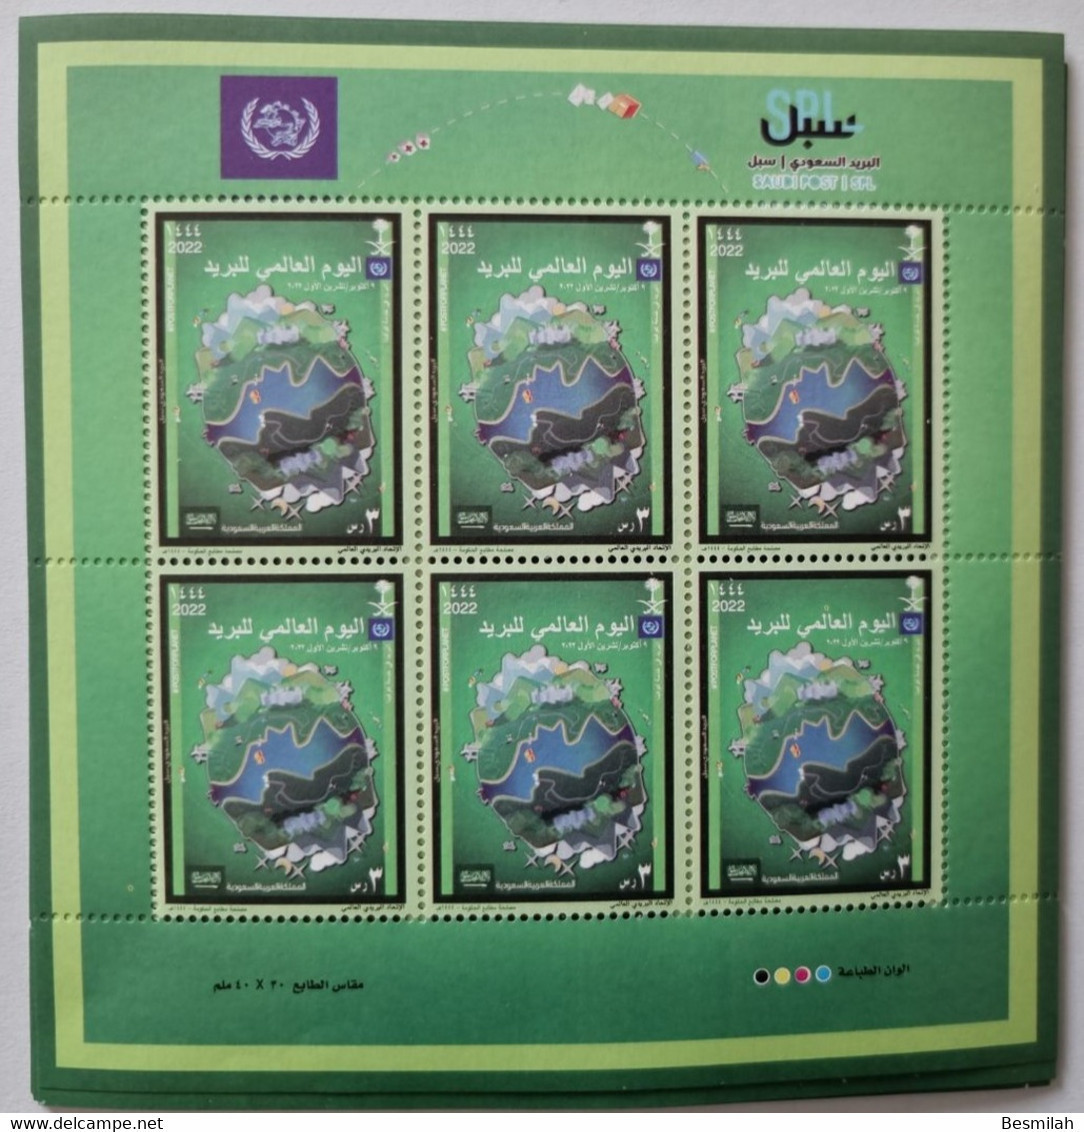 Saudi Arabia Stamp World Post Day 2022 (1444 Hijry) 7 Pcs Of 3 Riyals With FDVC (Very Rare Very Limited Printed) - Saudi Arabia